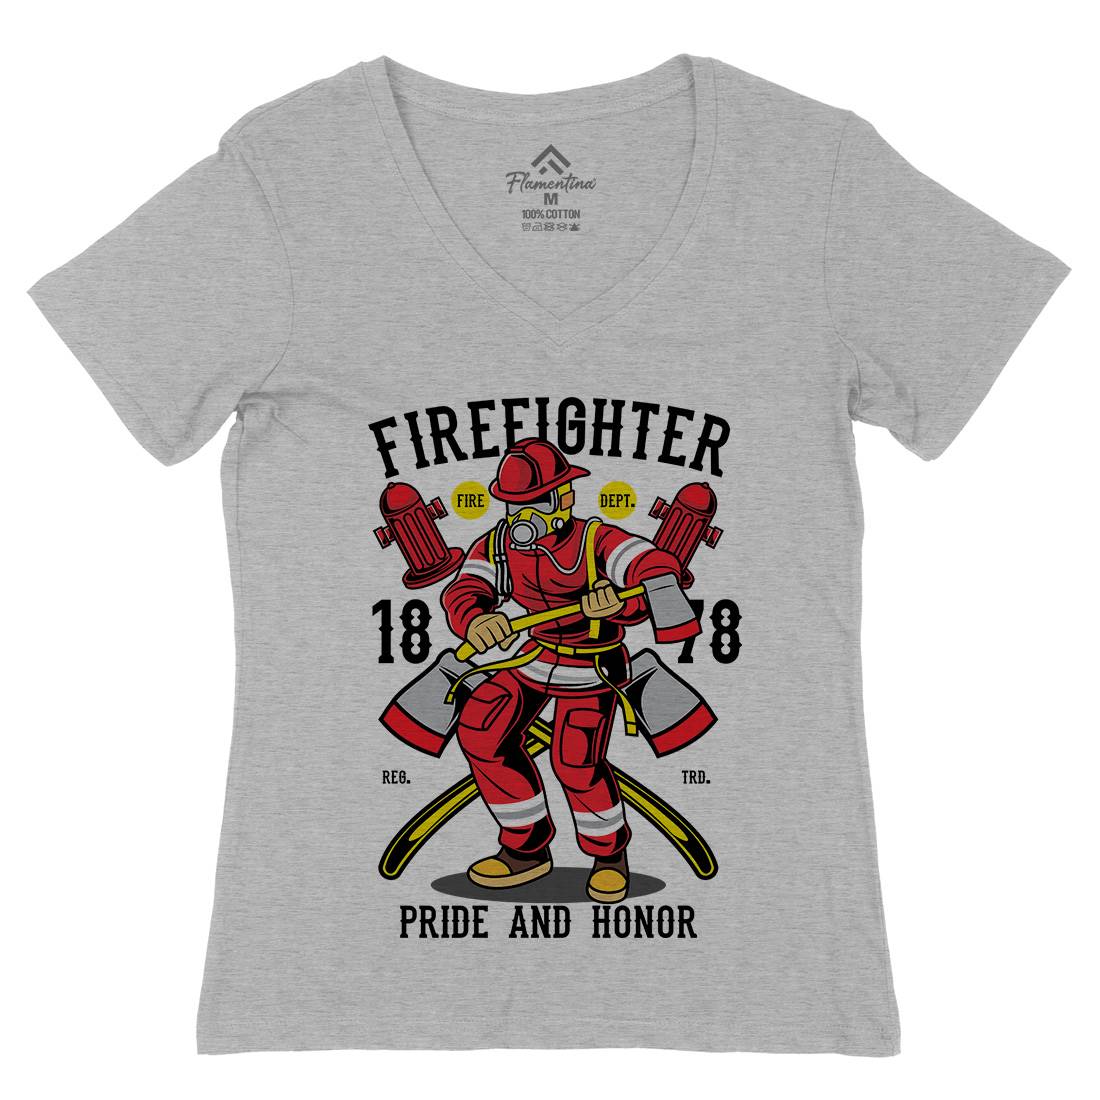 Fire Fighter Womens Organic V-Neck T-Shirt Firefighters C358